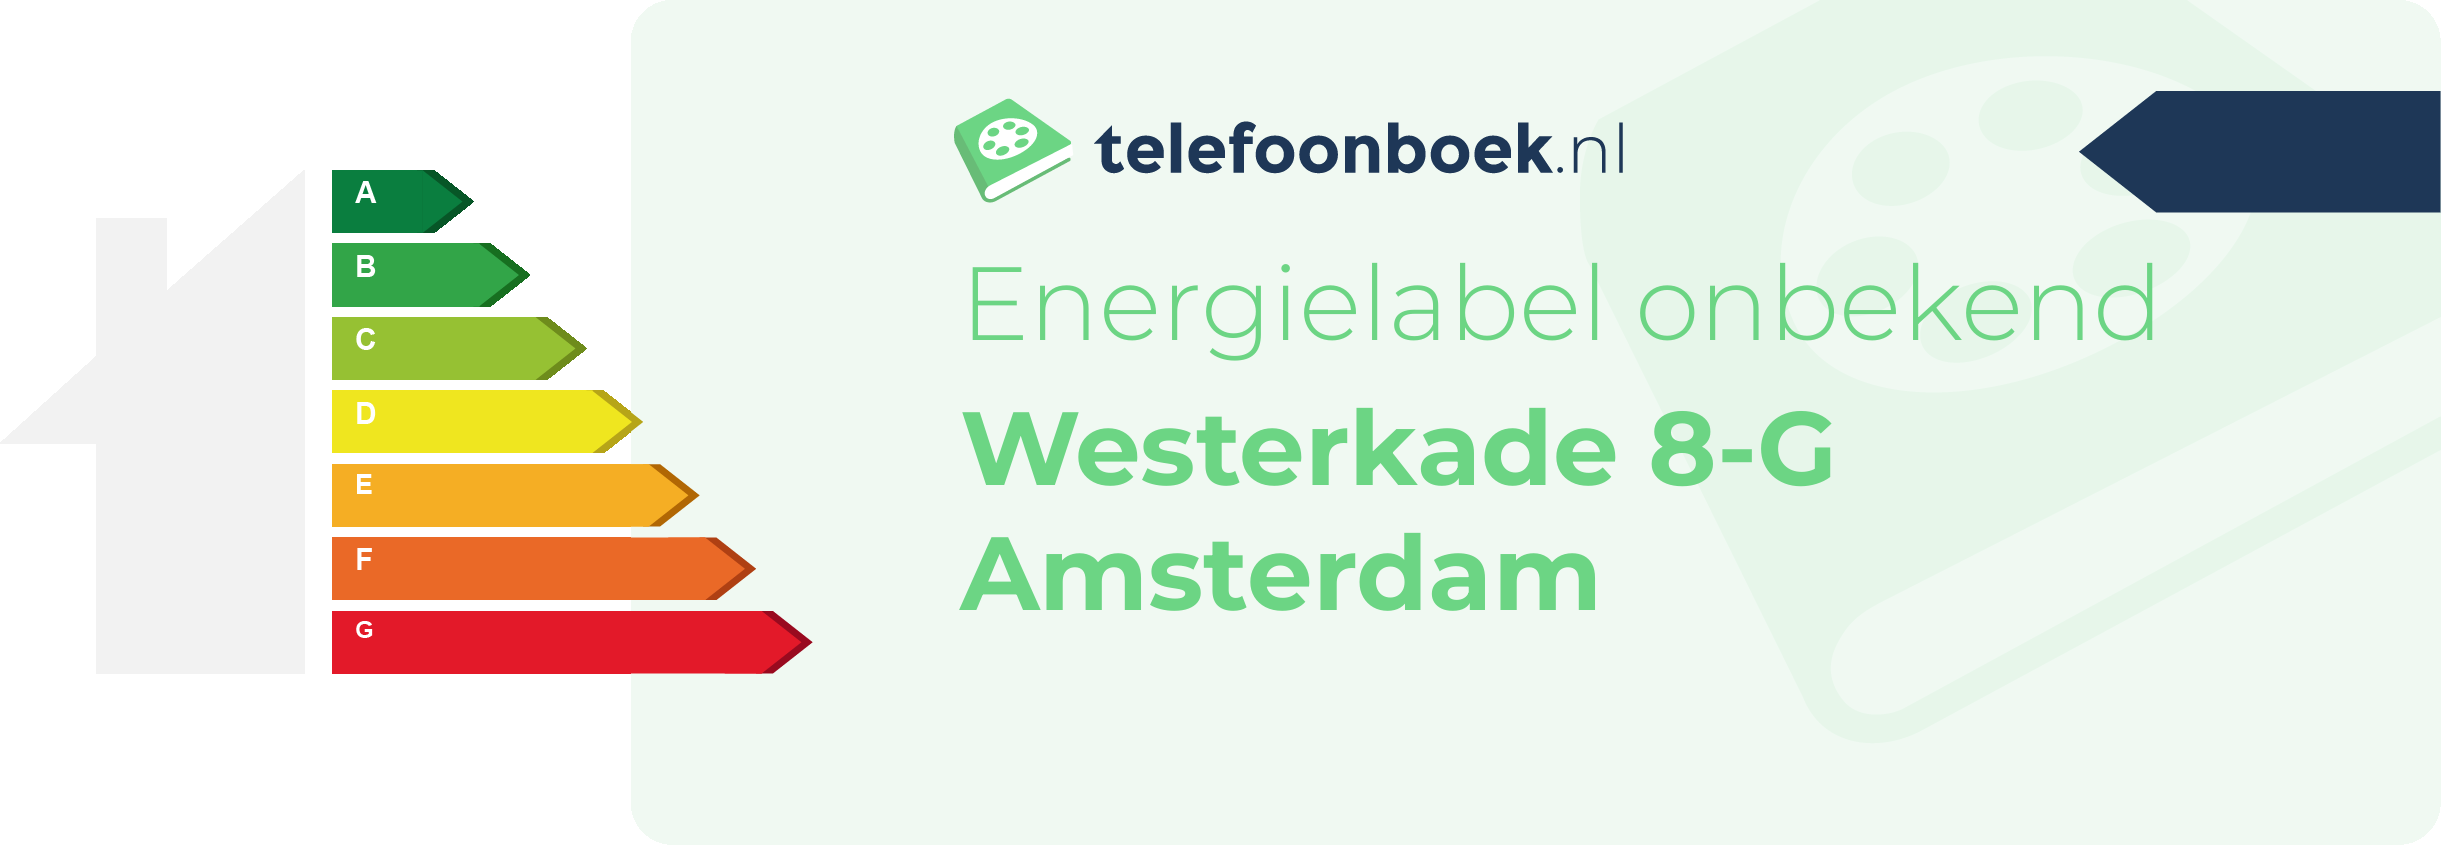 Energielabel Westerkade 8-G Amsterdam